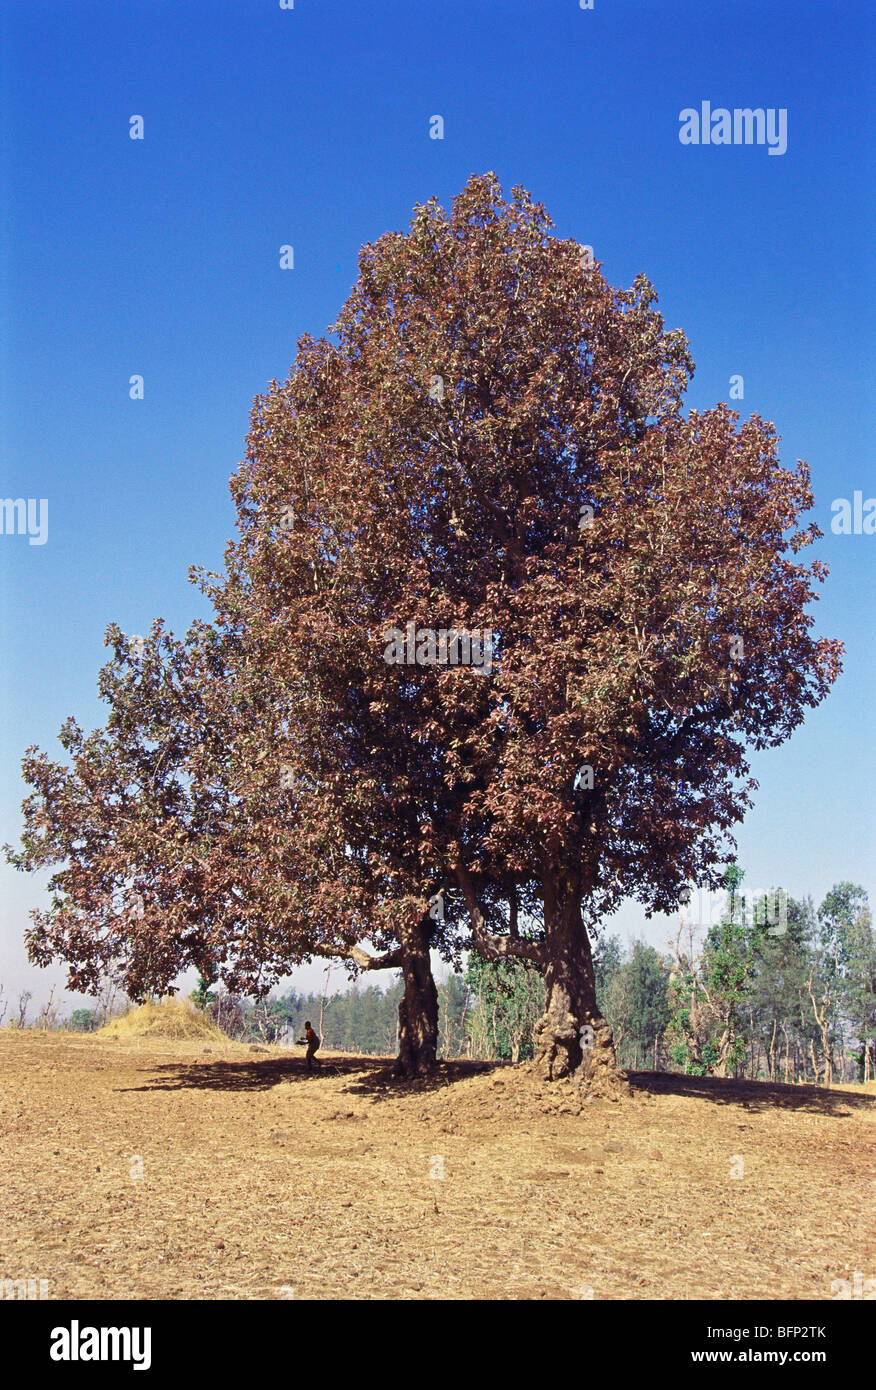 Mahua tree ; Mohwa tree ; Madhuca longifolia ; madhuca latifolia ; India ; asia ; mahuwa tree ; mahwa tree ; mohulo tree ; Iluppai ; vippa chettu tree Stock Photo